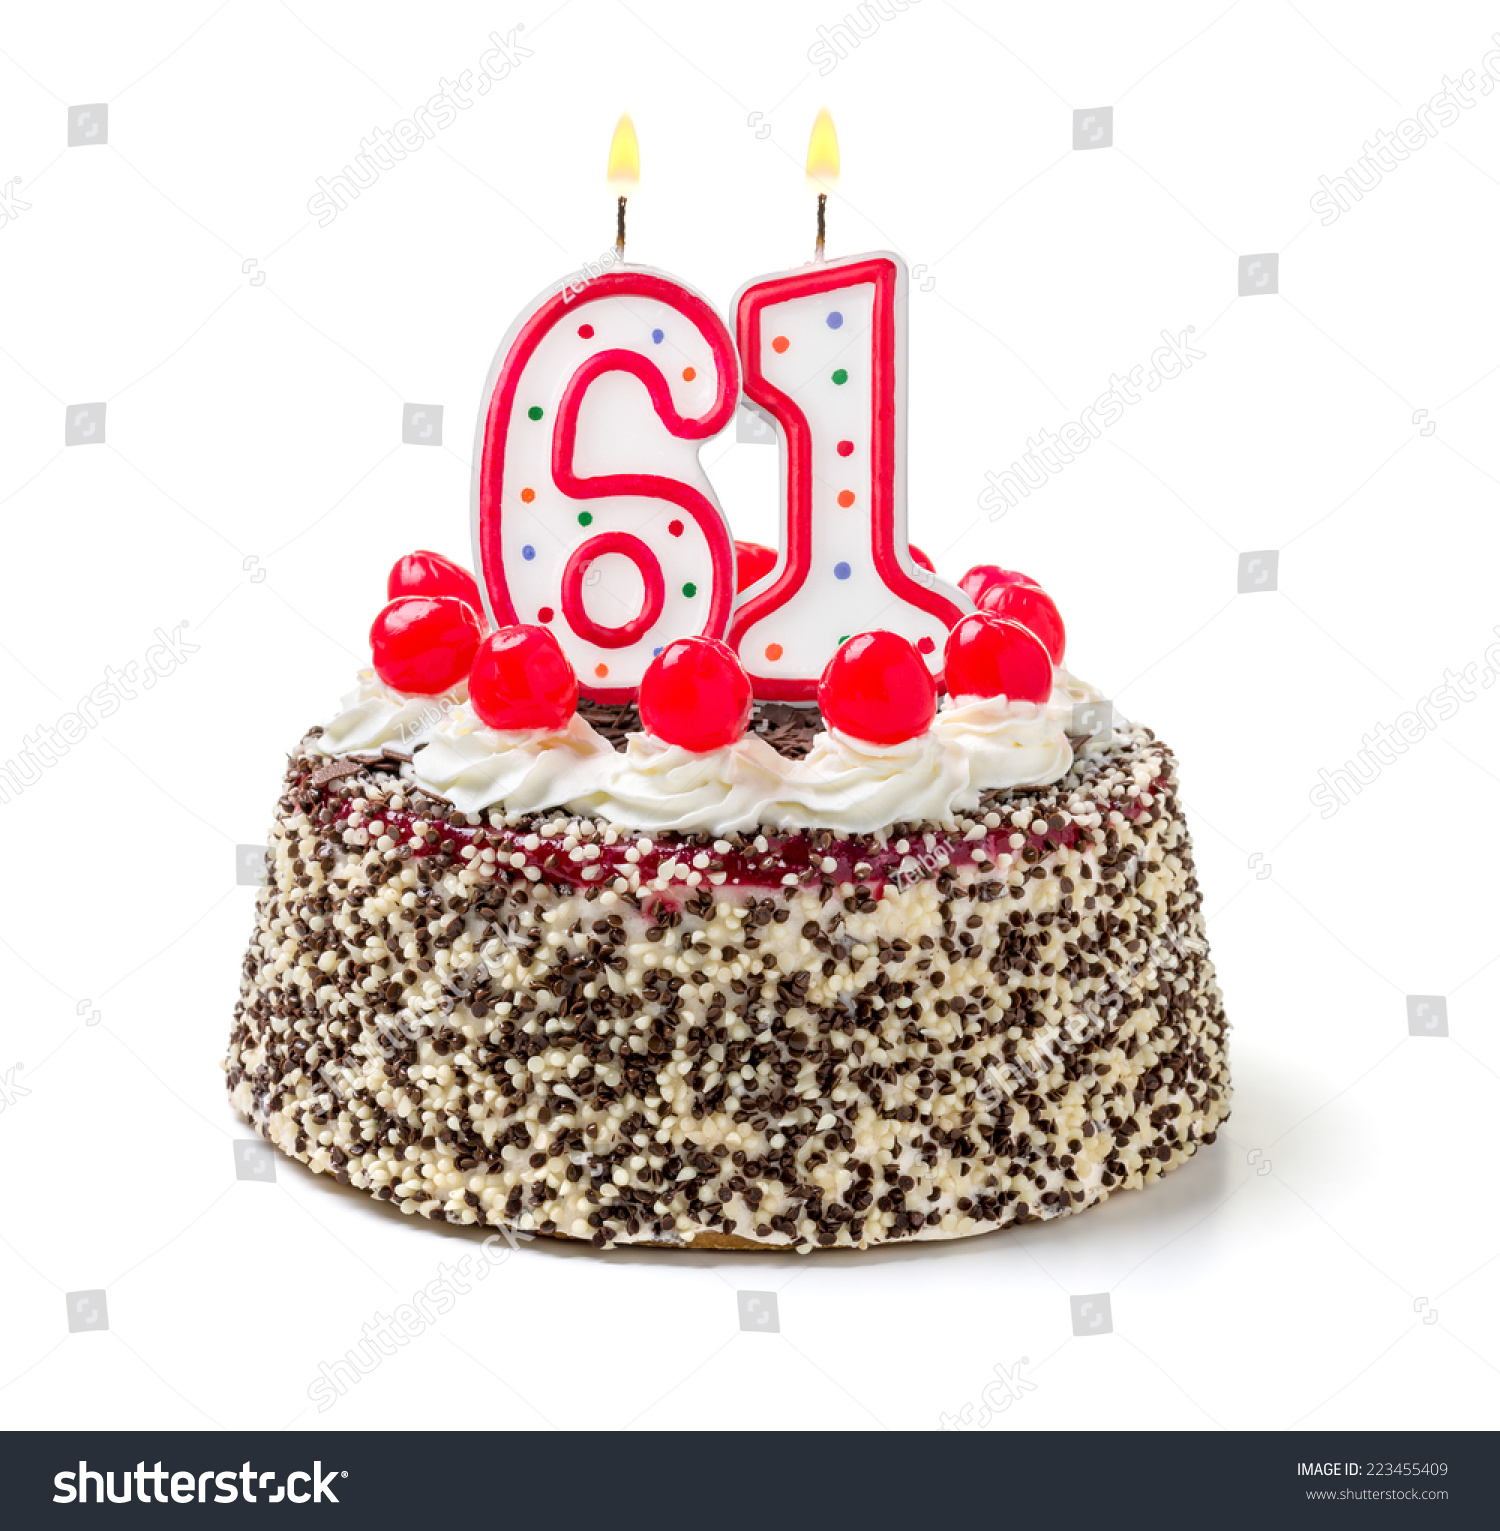 Birthday Cake With Burning Candle Number 61 Stock Photo 223455409 ...